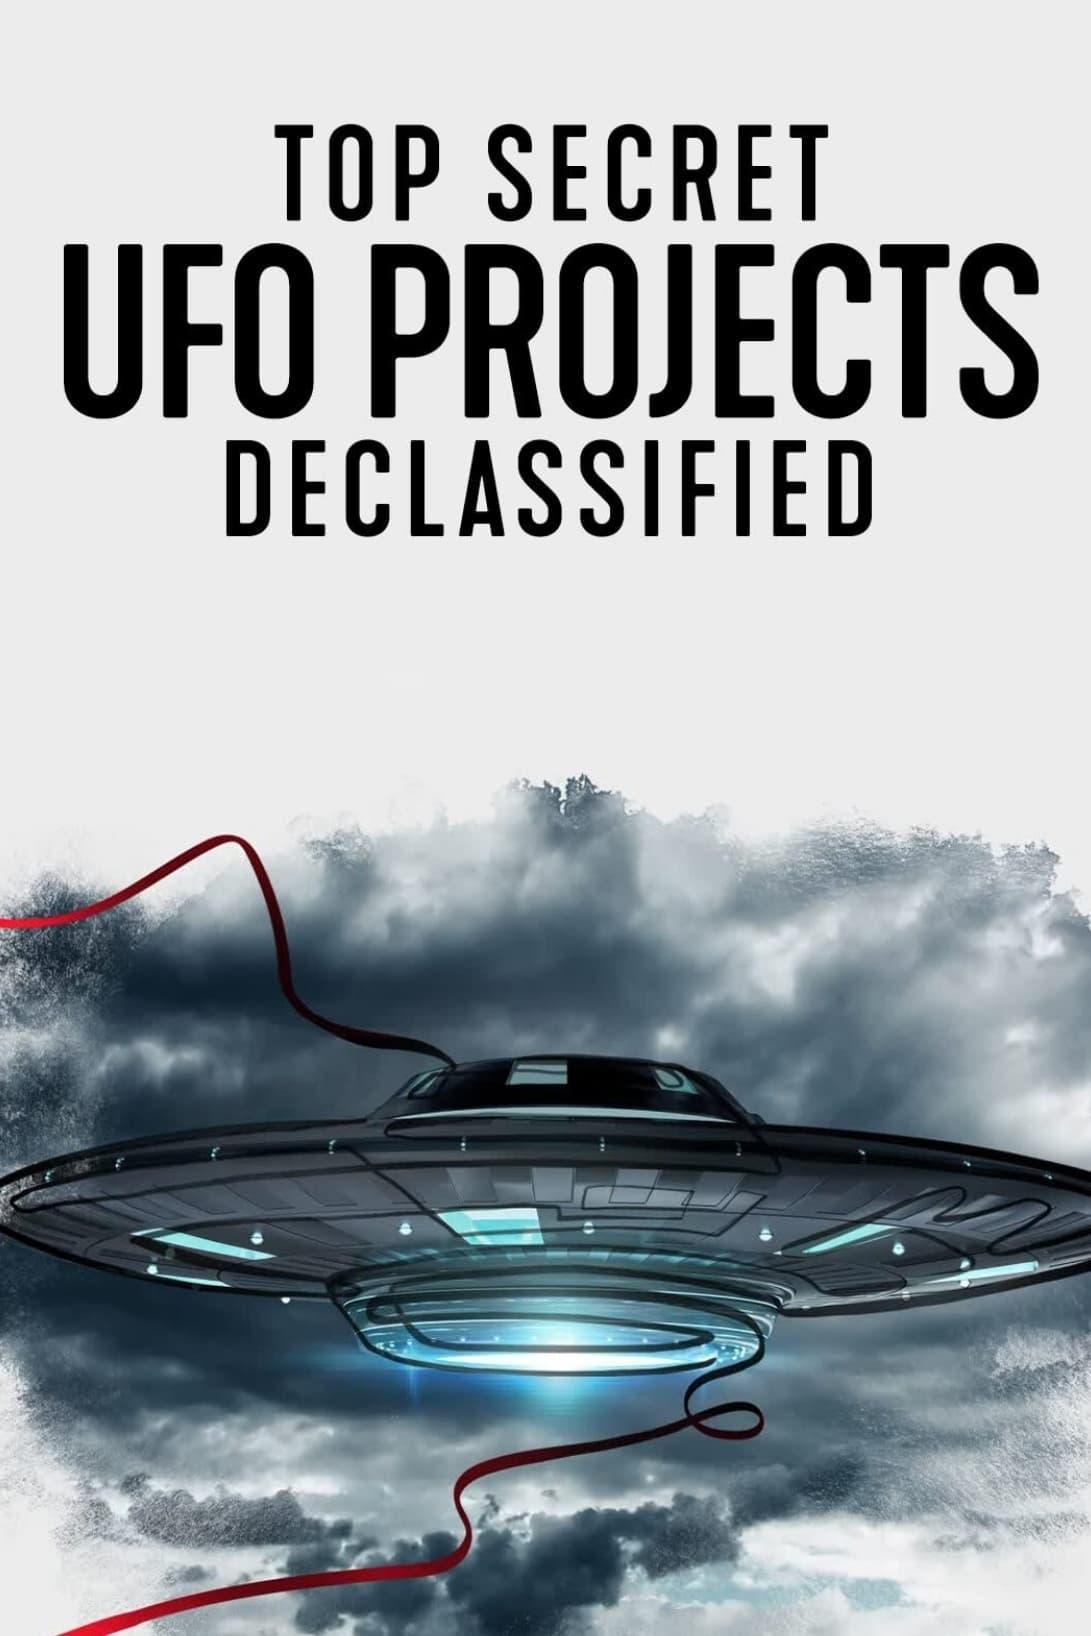 Top Secret UFO Projects Declassified poster